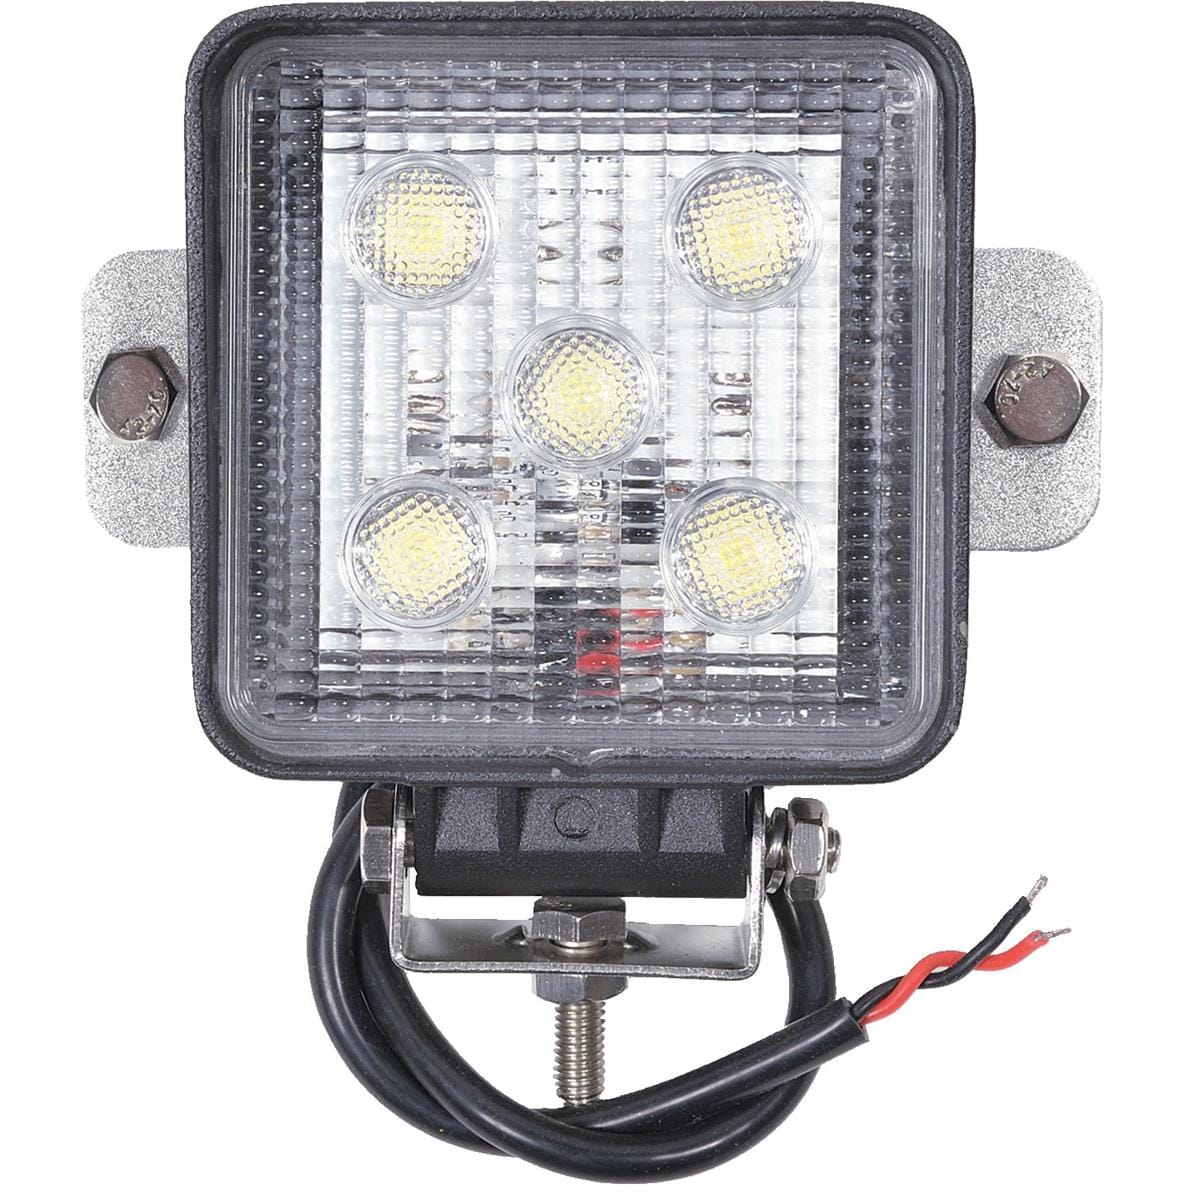 Professional-Grade LED Worklight, 1,200-lumen output